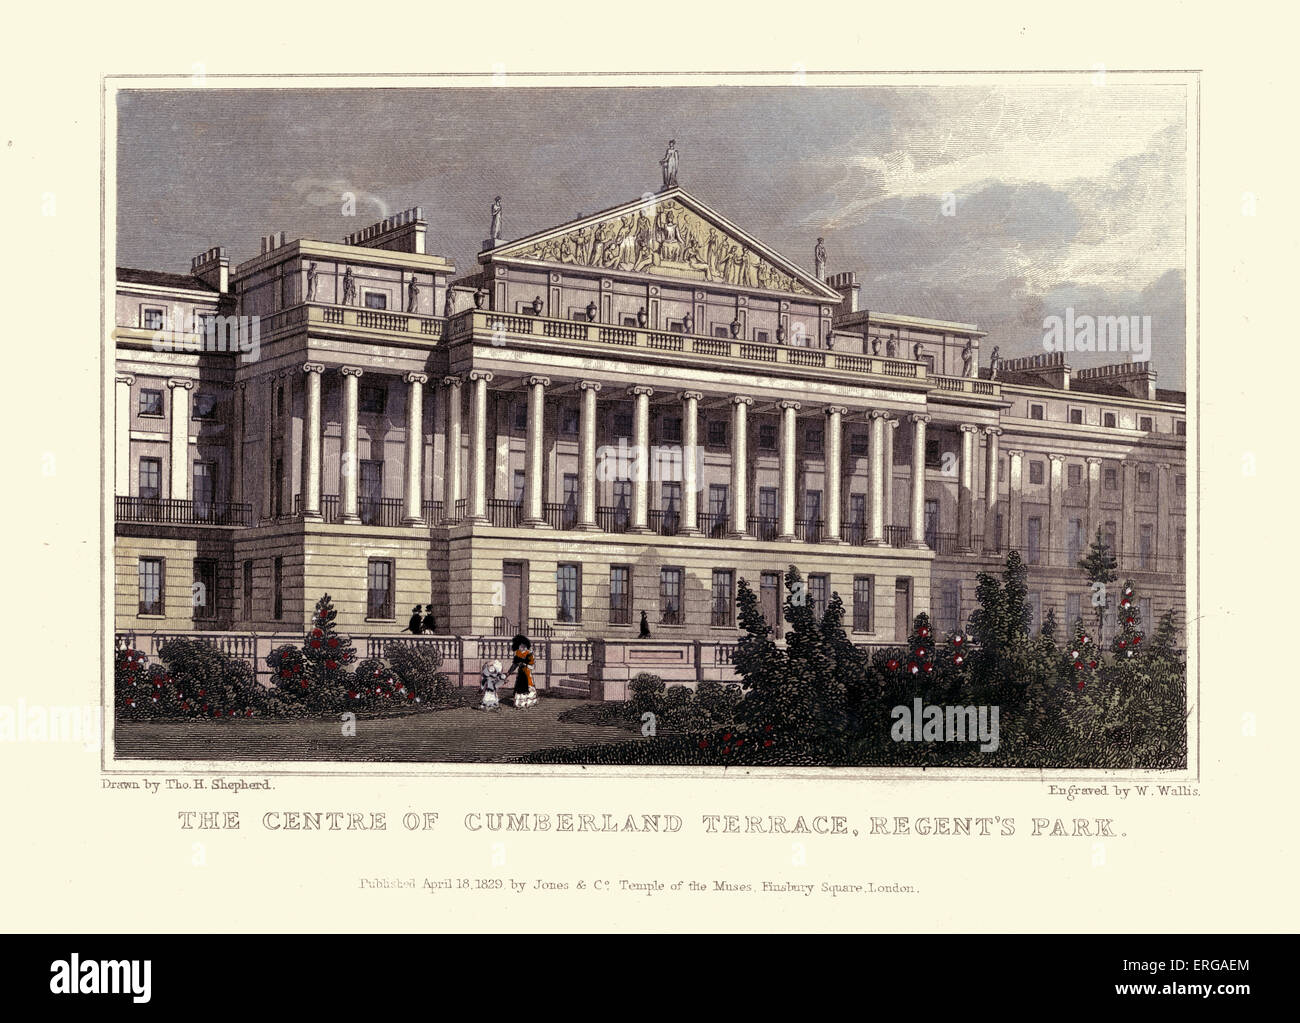 Viste di Londra: il centro di Cumberland terrazza, Regent's Park. Disegnata da Thomas Hosmer Shepherd 1792 - 1864. Incisi da W. Foto Stock